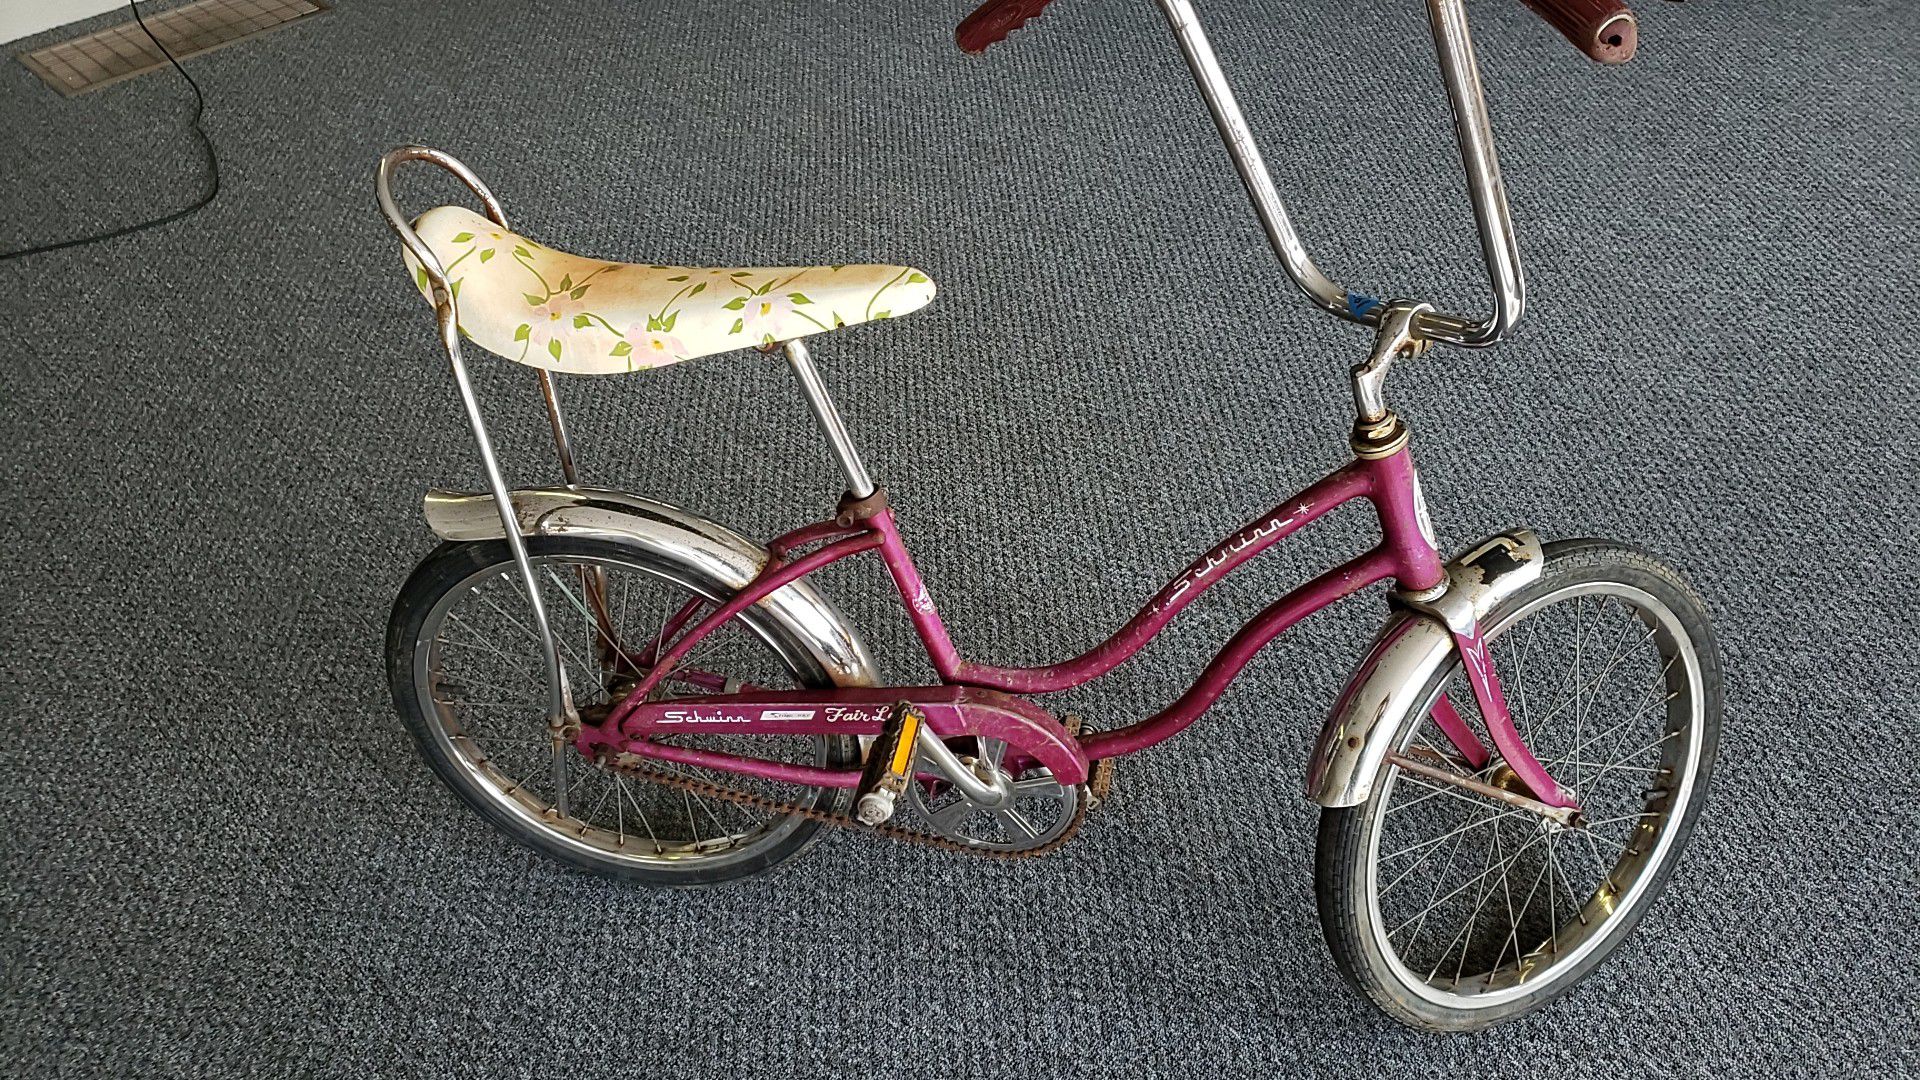 1968 Schwinn Stingray Fair lady girls bicycle